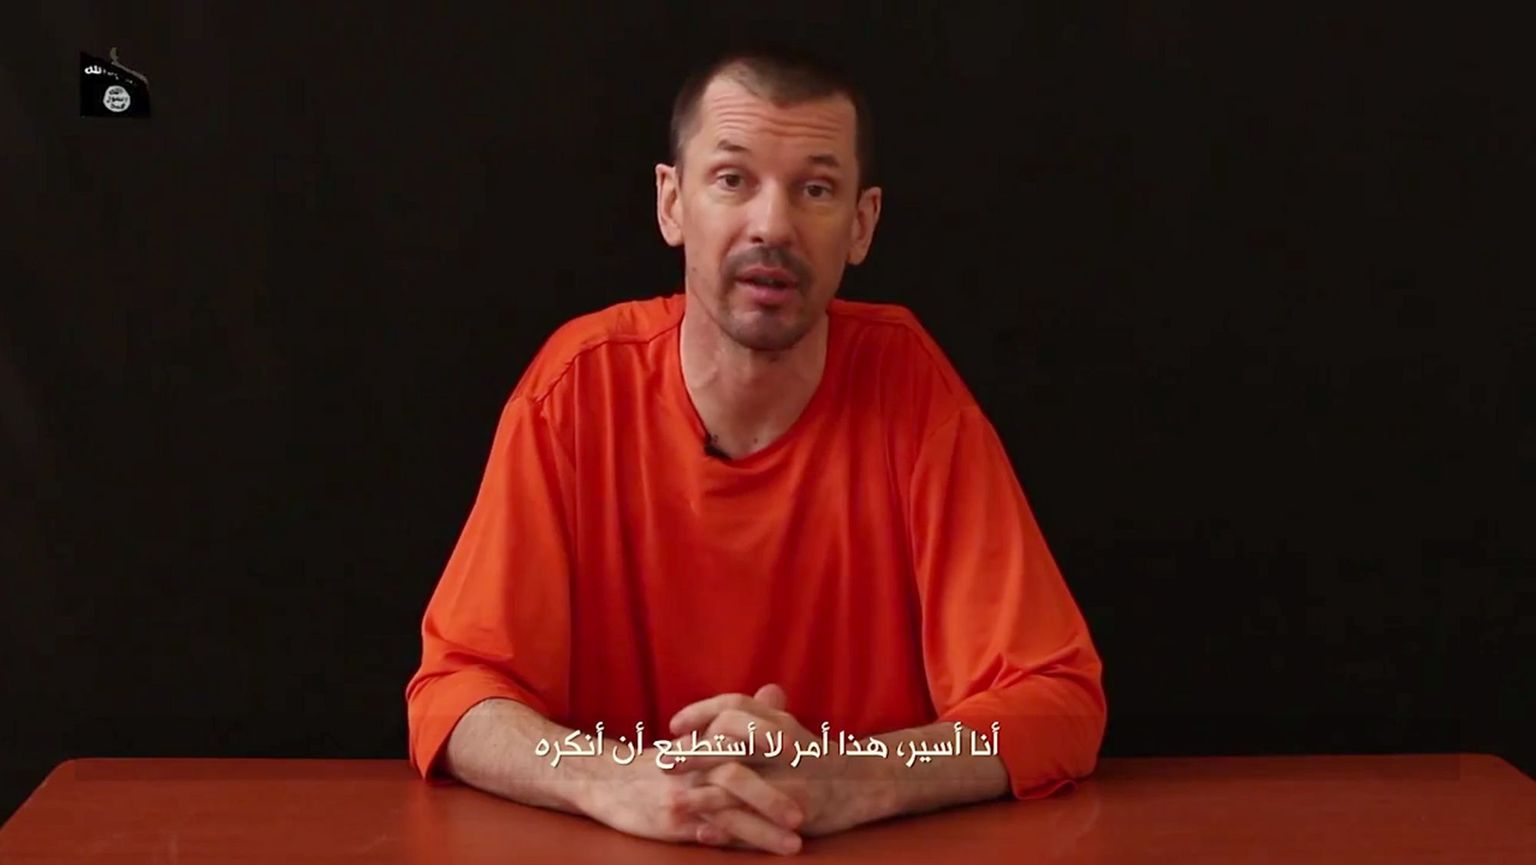 John Cantlie Islamiriigi 2014. aasta propagandavideol